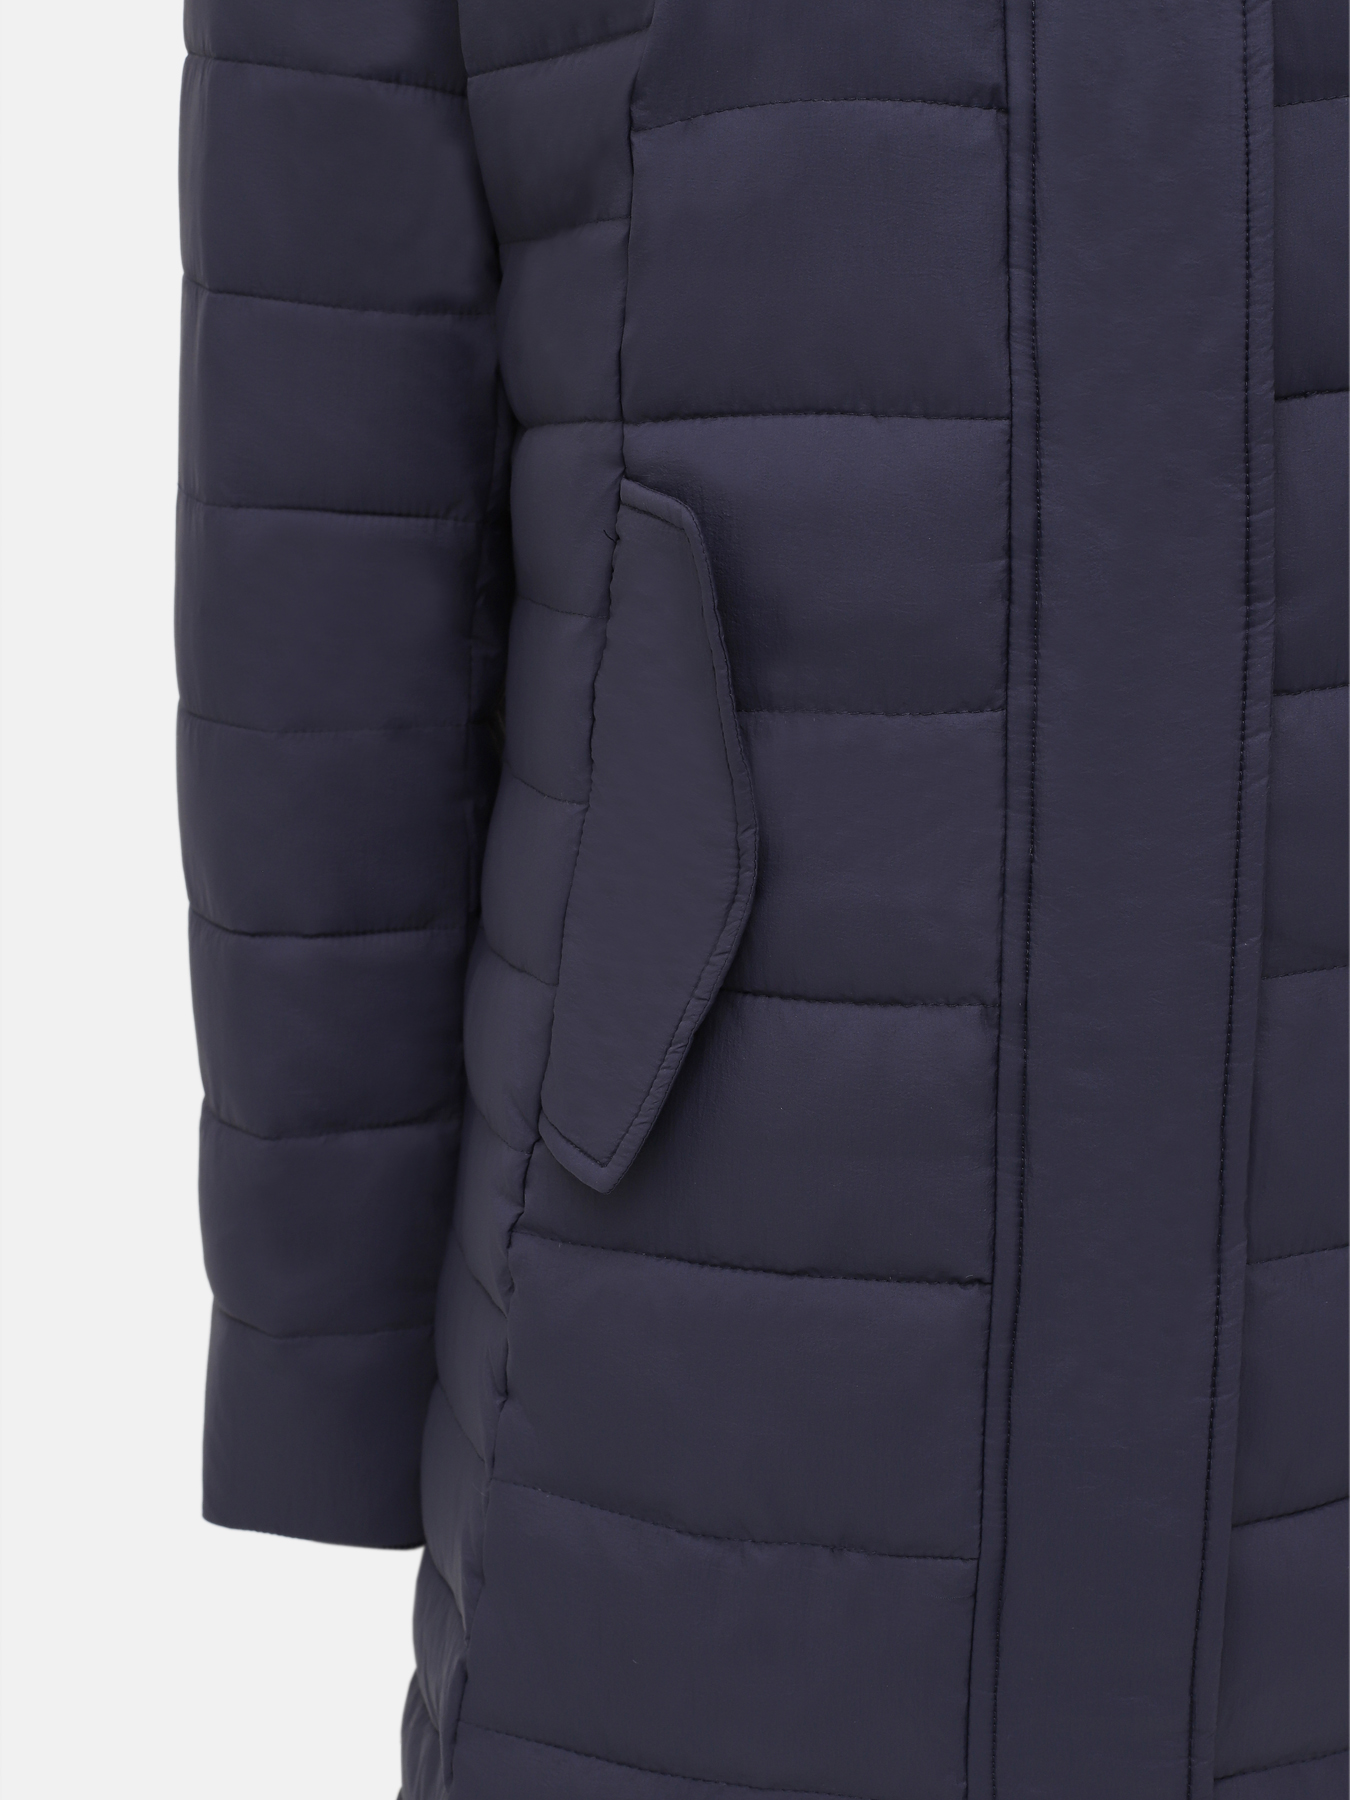 Пальто зимнее Alessandro Manzoni Purpur 384503-193, цвет темно-синий, размер 50-52 - фото 4